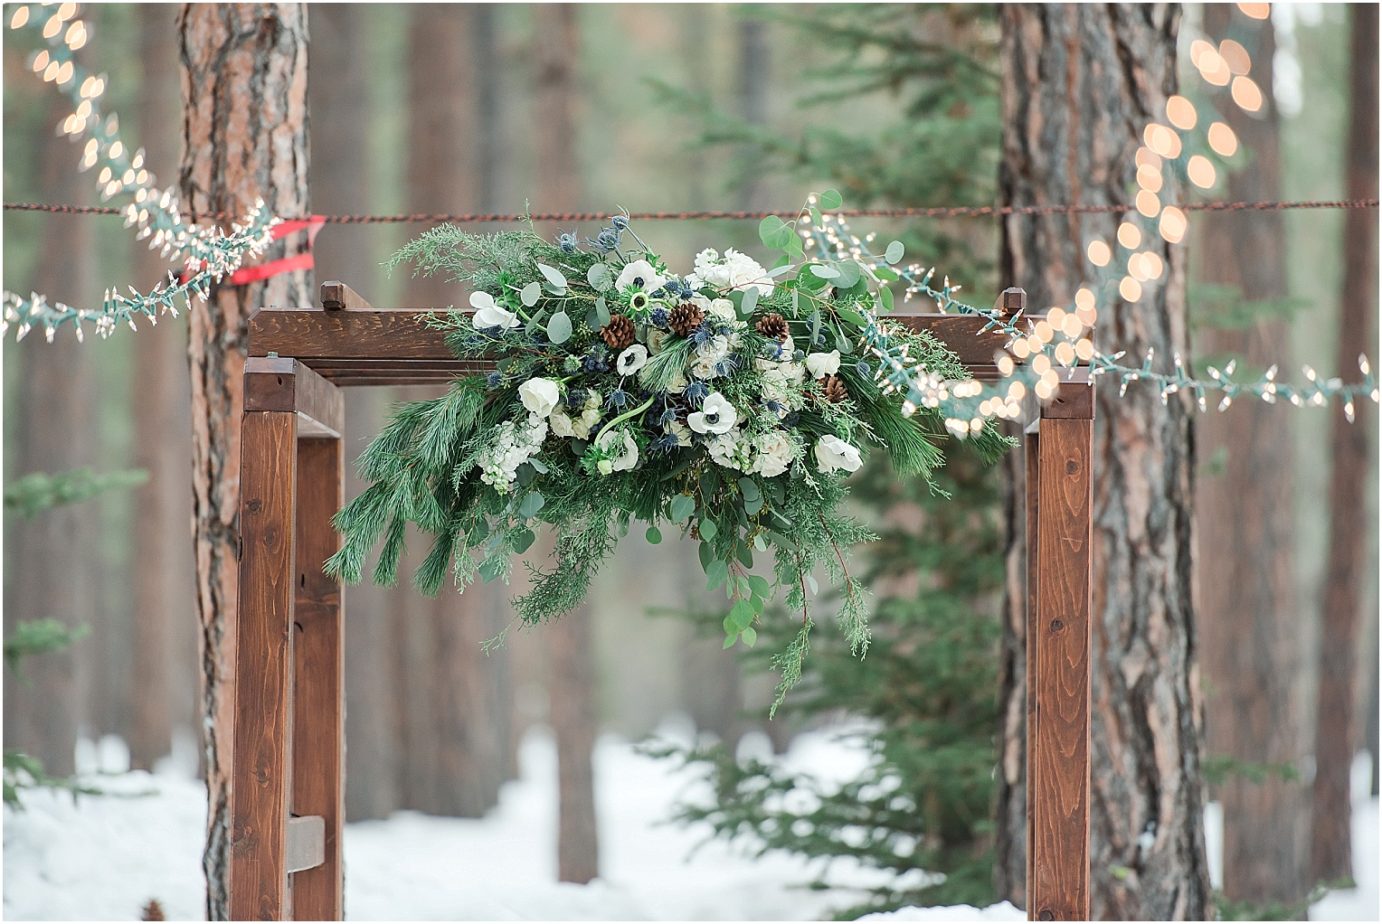 Favorite wedding flowers of 2017 For brides Five Pine Lodge wedding flowers